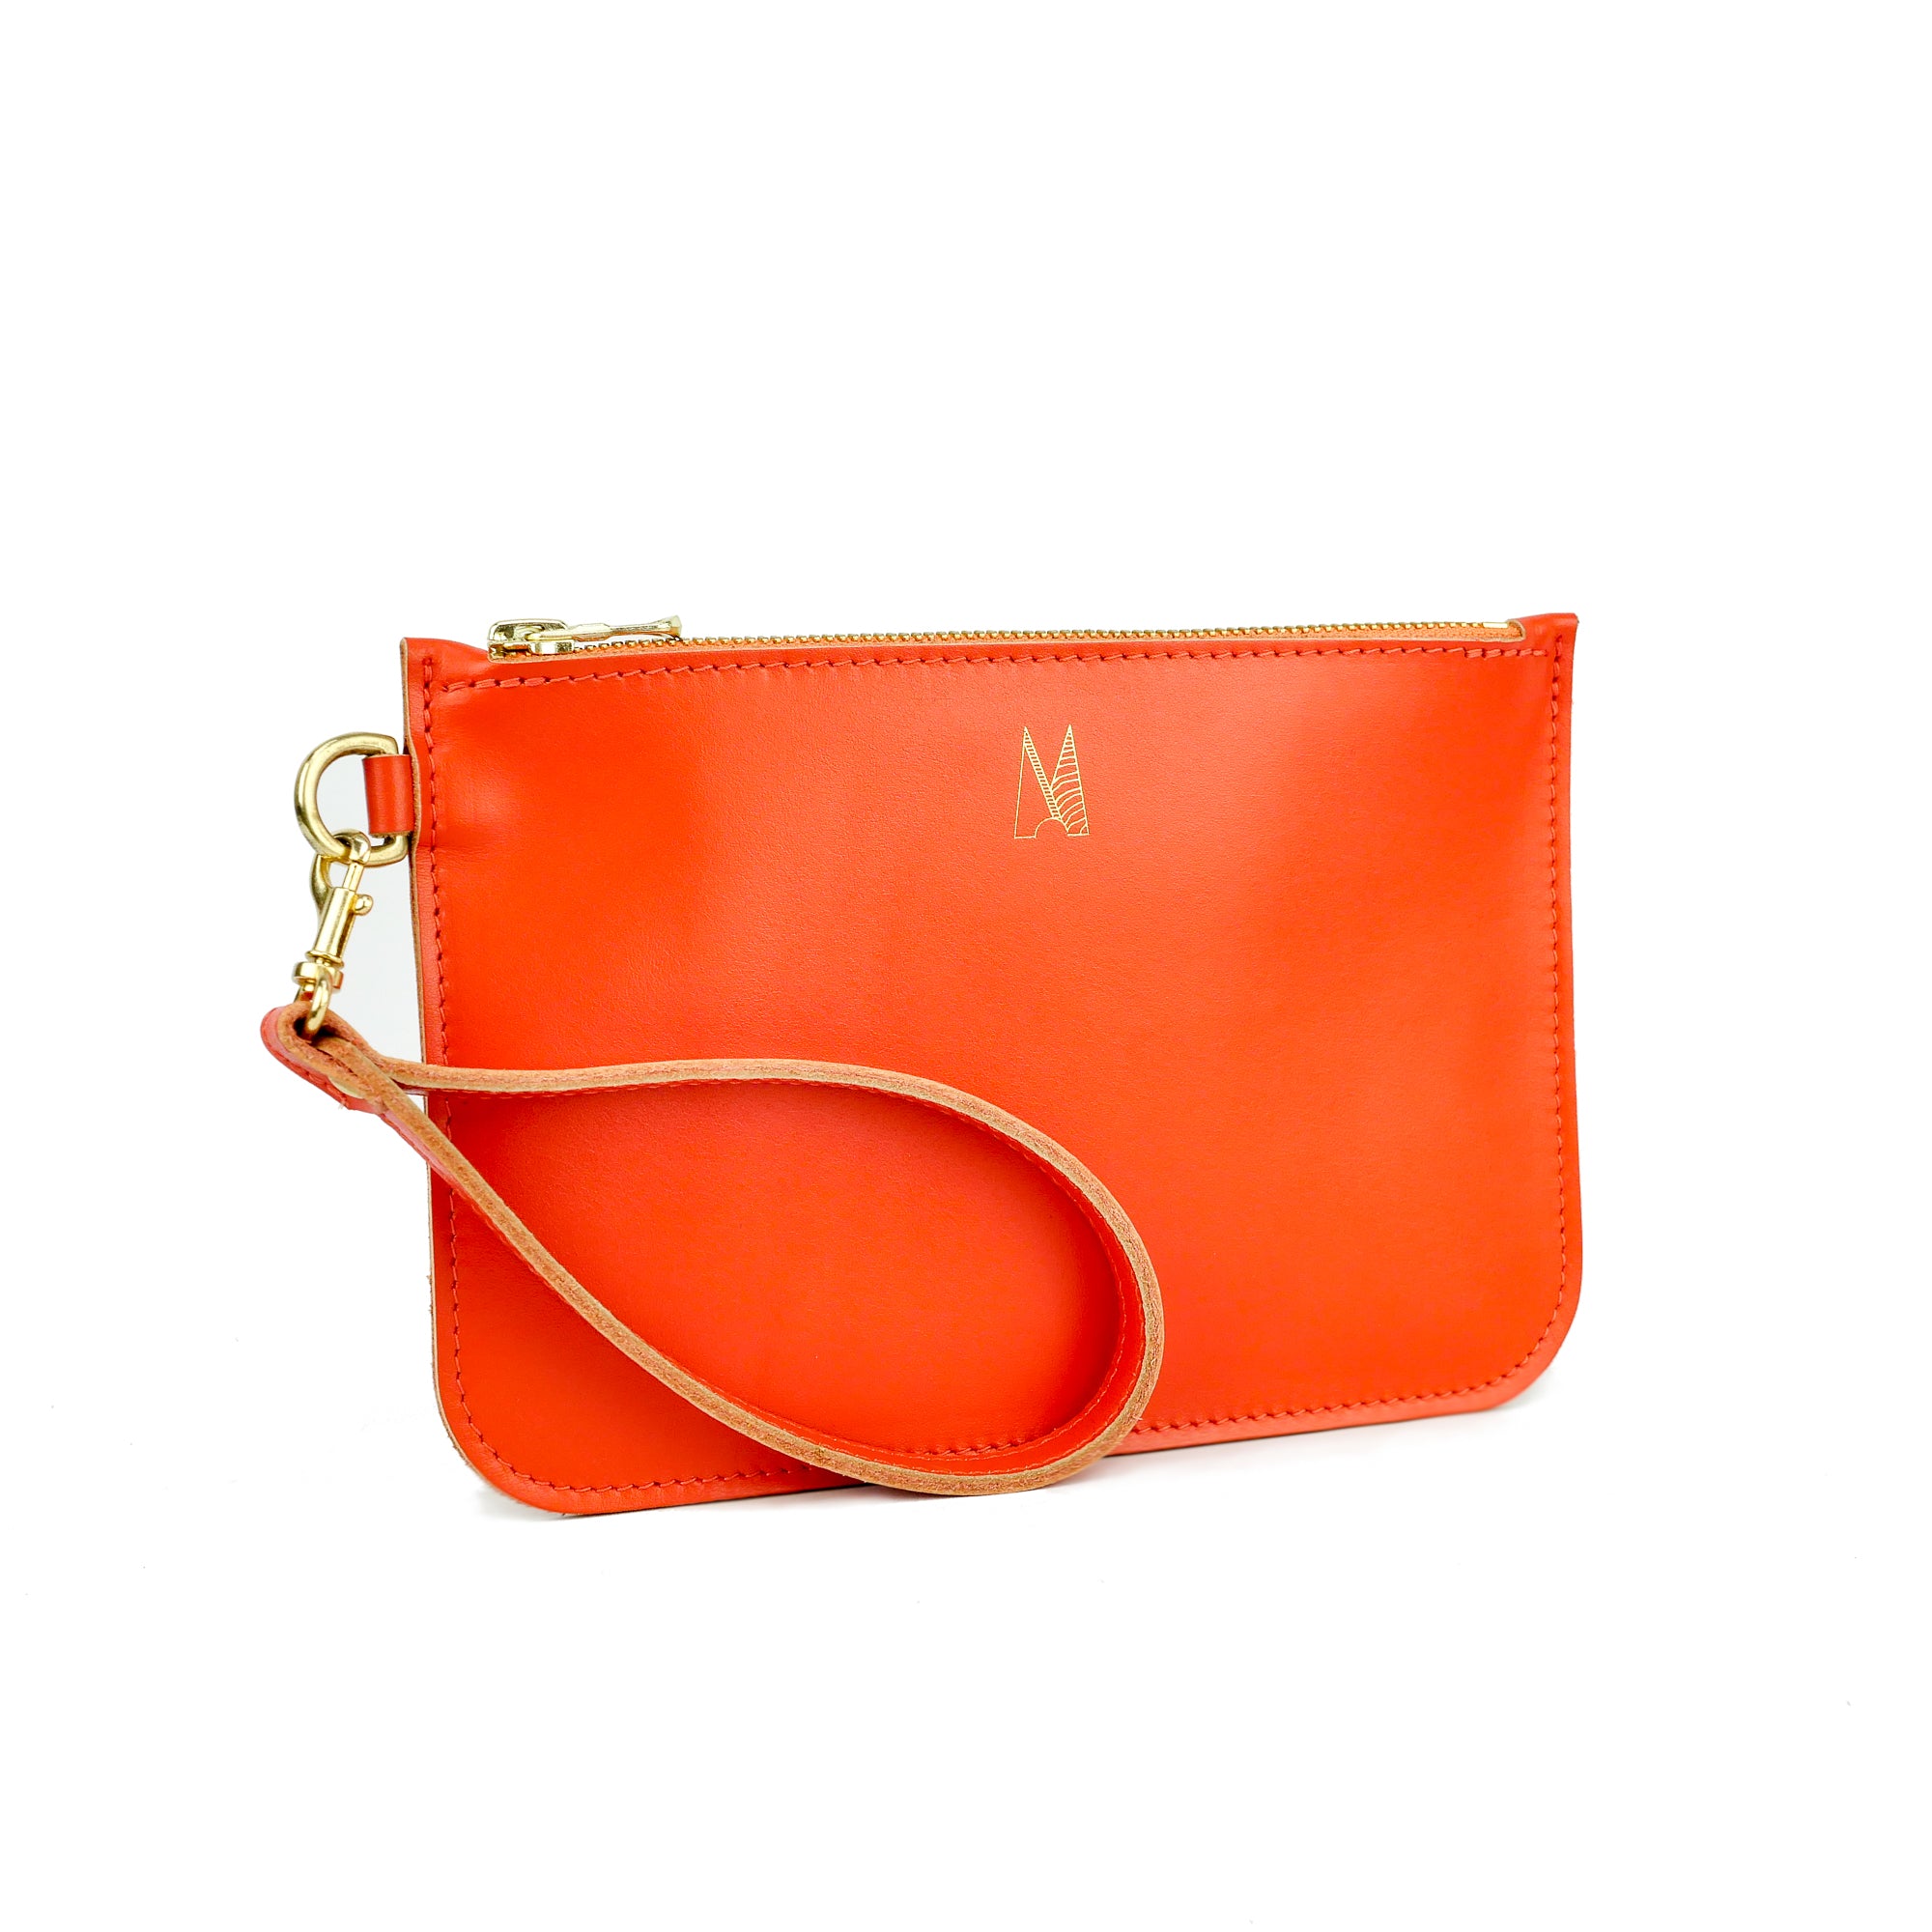 Leather Wristlet Clutch Bag in Tangerine | Handmade Leather Clutch Bag ...